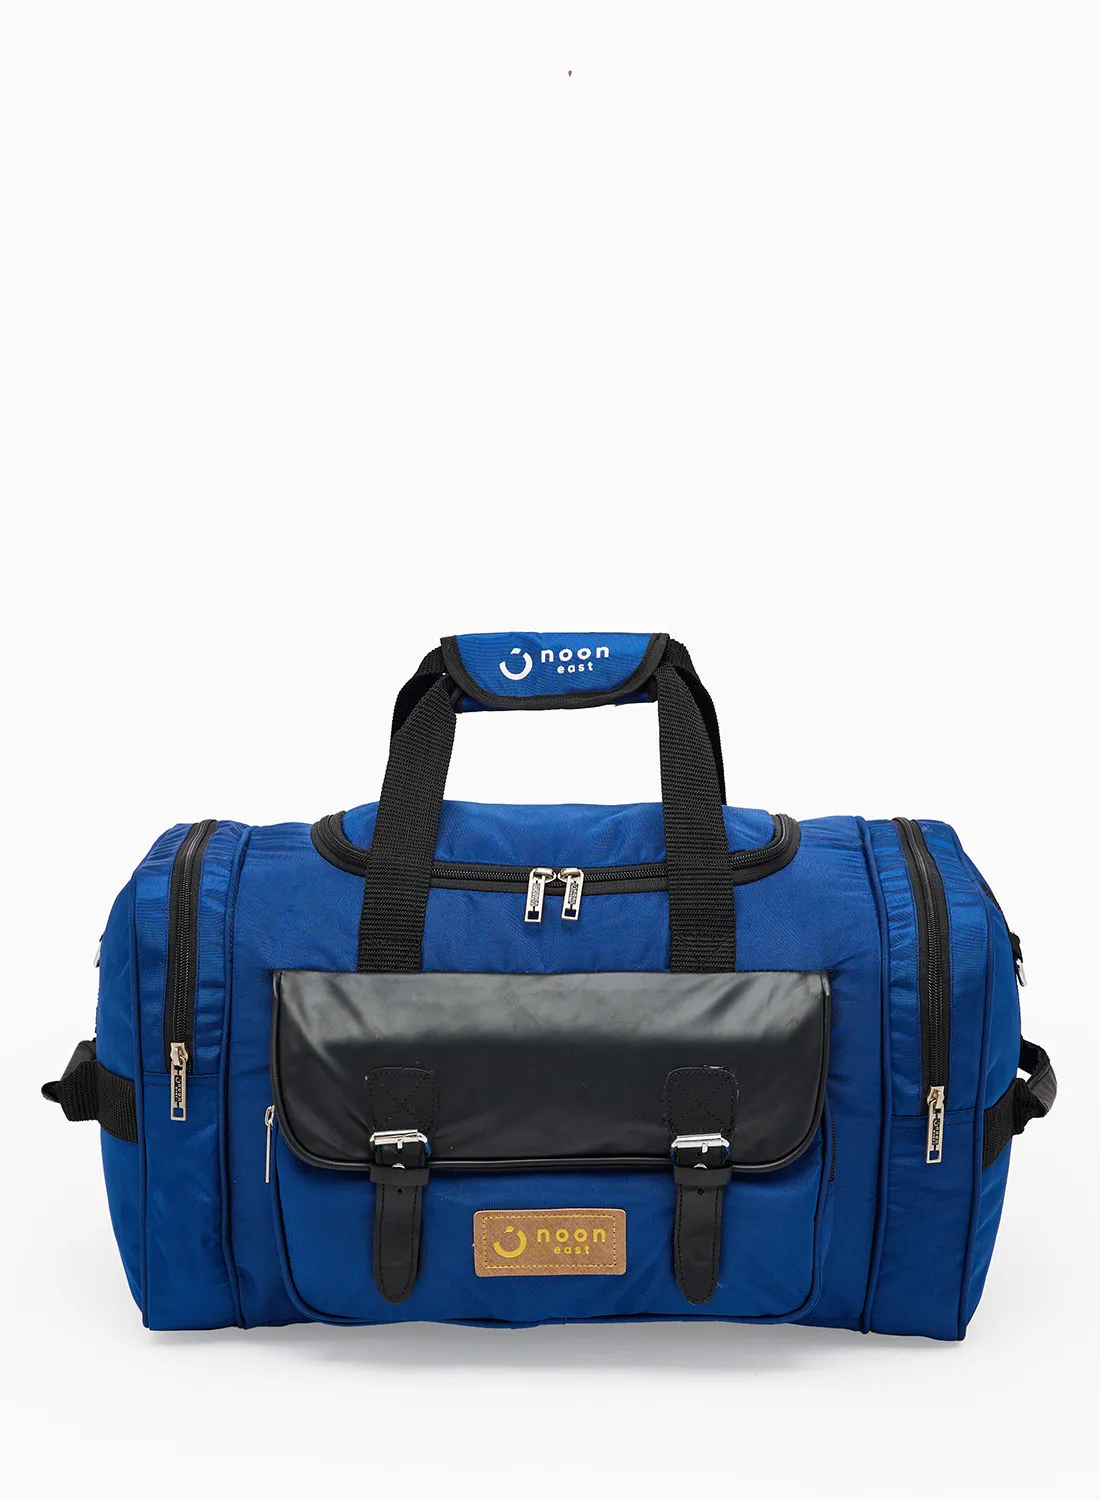 Noon East Lightweight Waterproof Polyester Multipurpose Luggage Duffle Bag/Gym Bag 20 Inch Blue